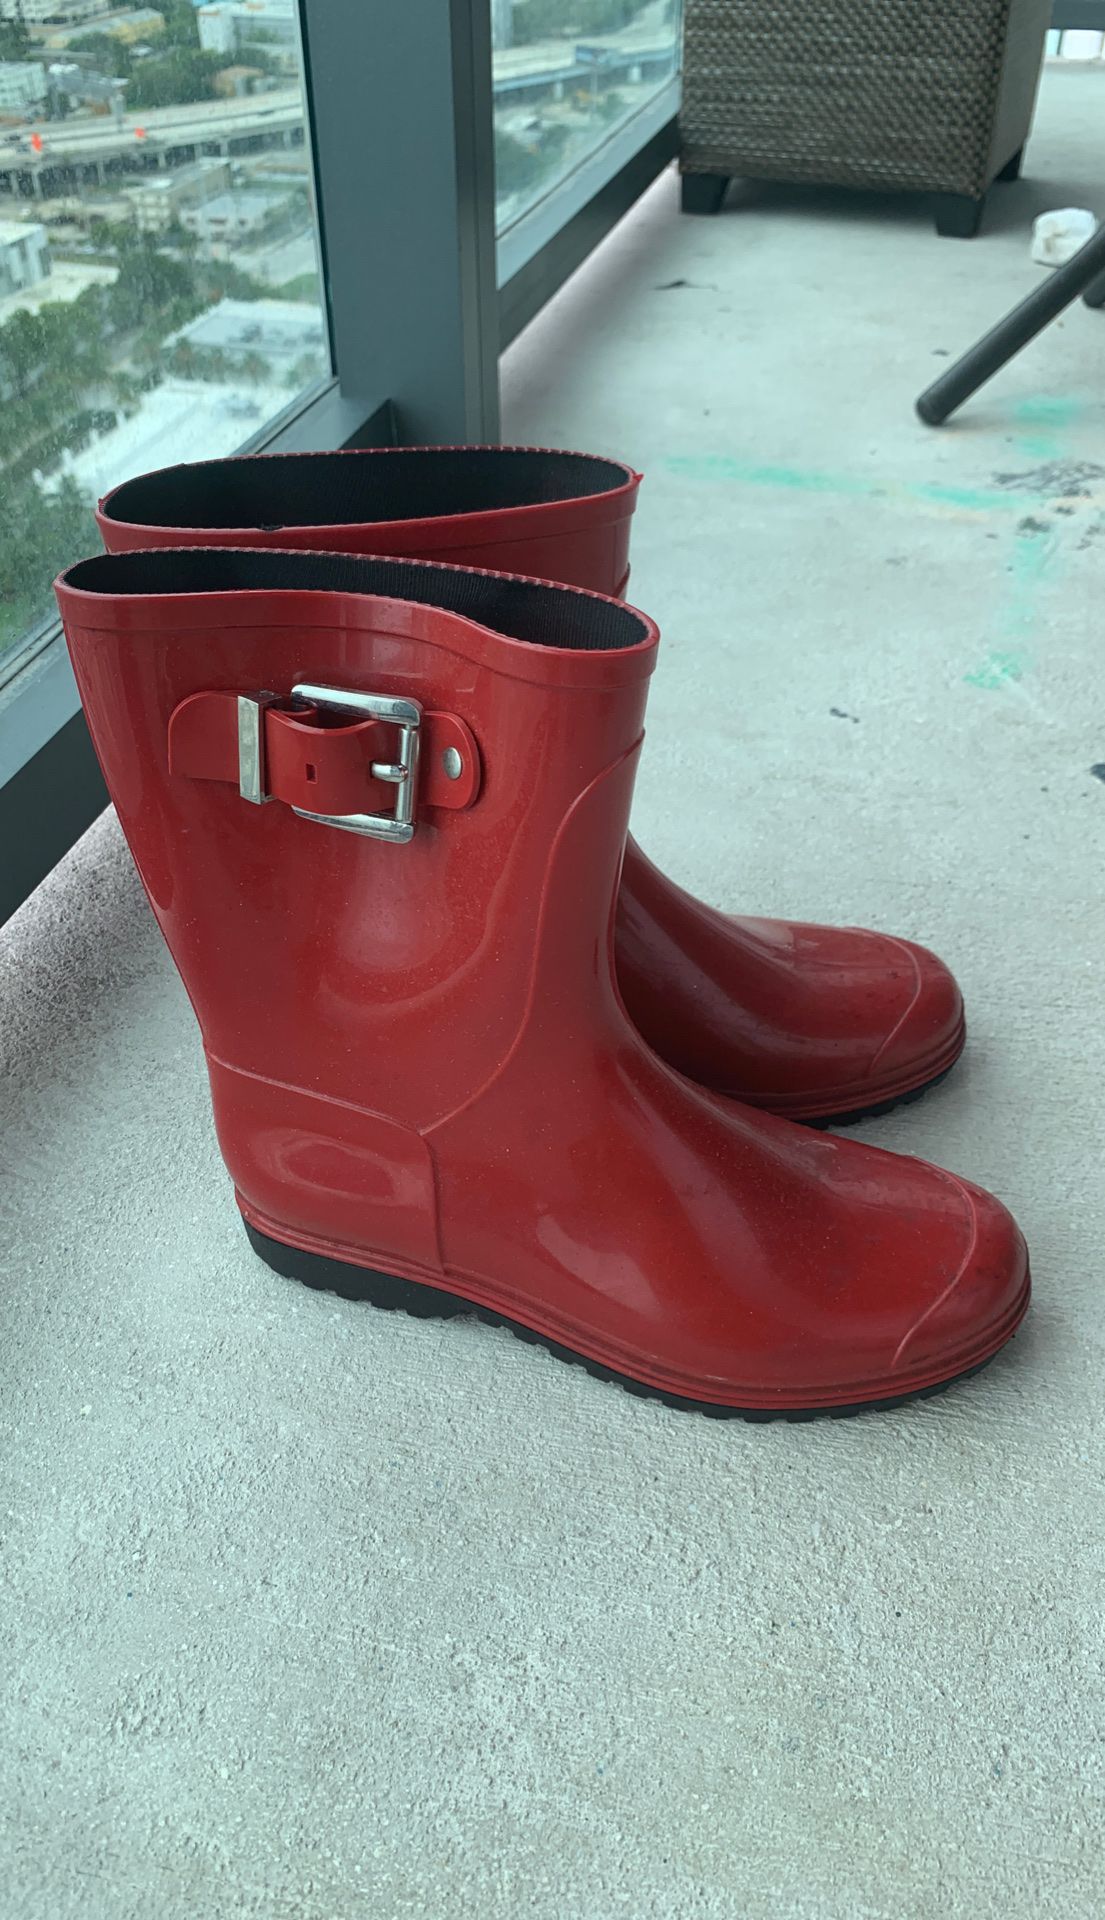 Size 6-7 women’s rain boots.